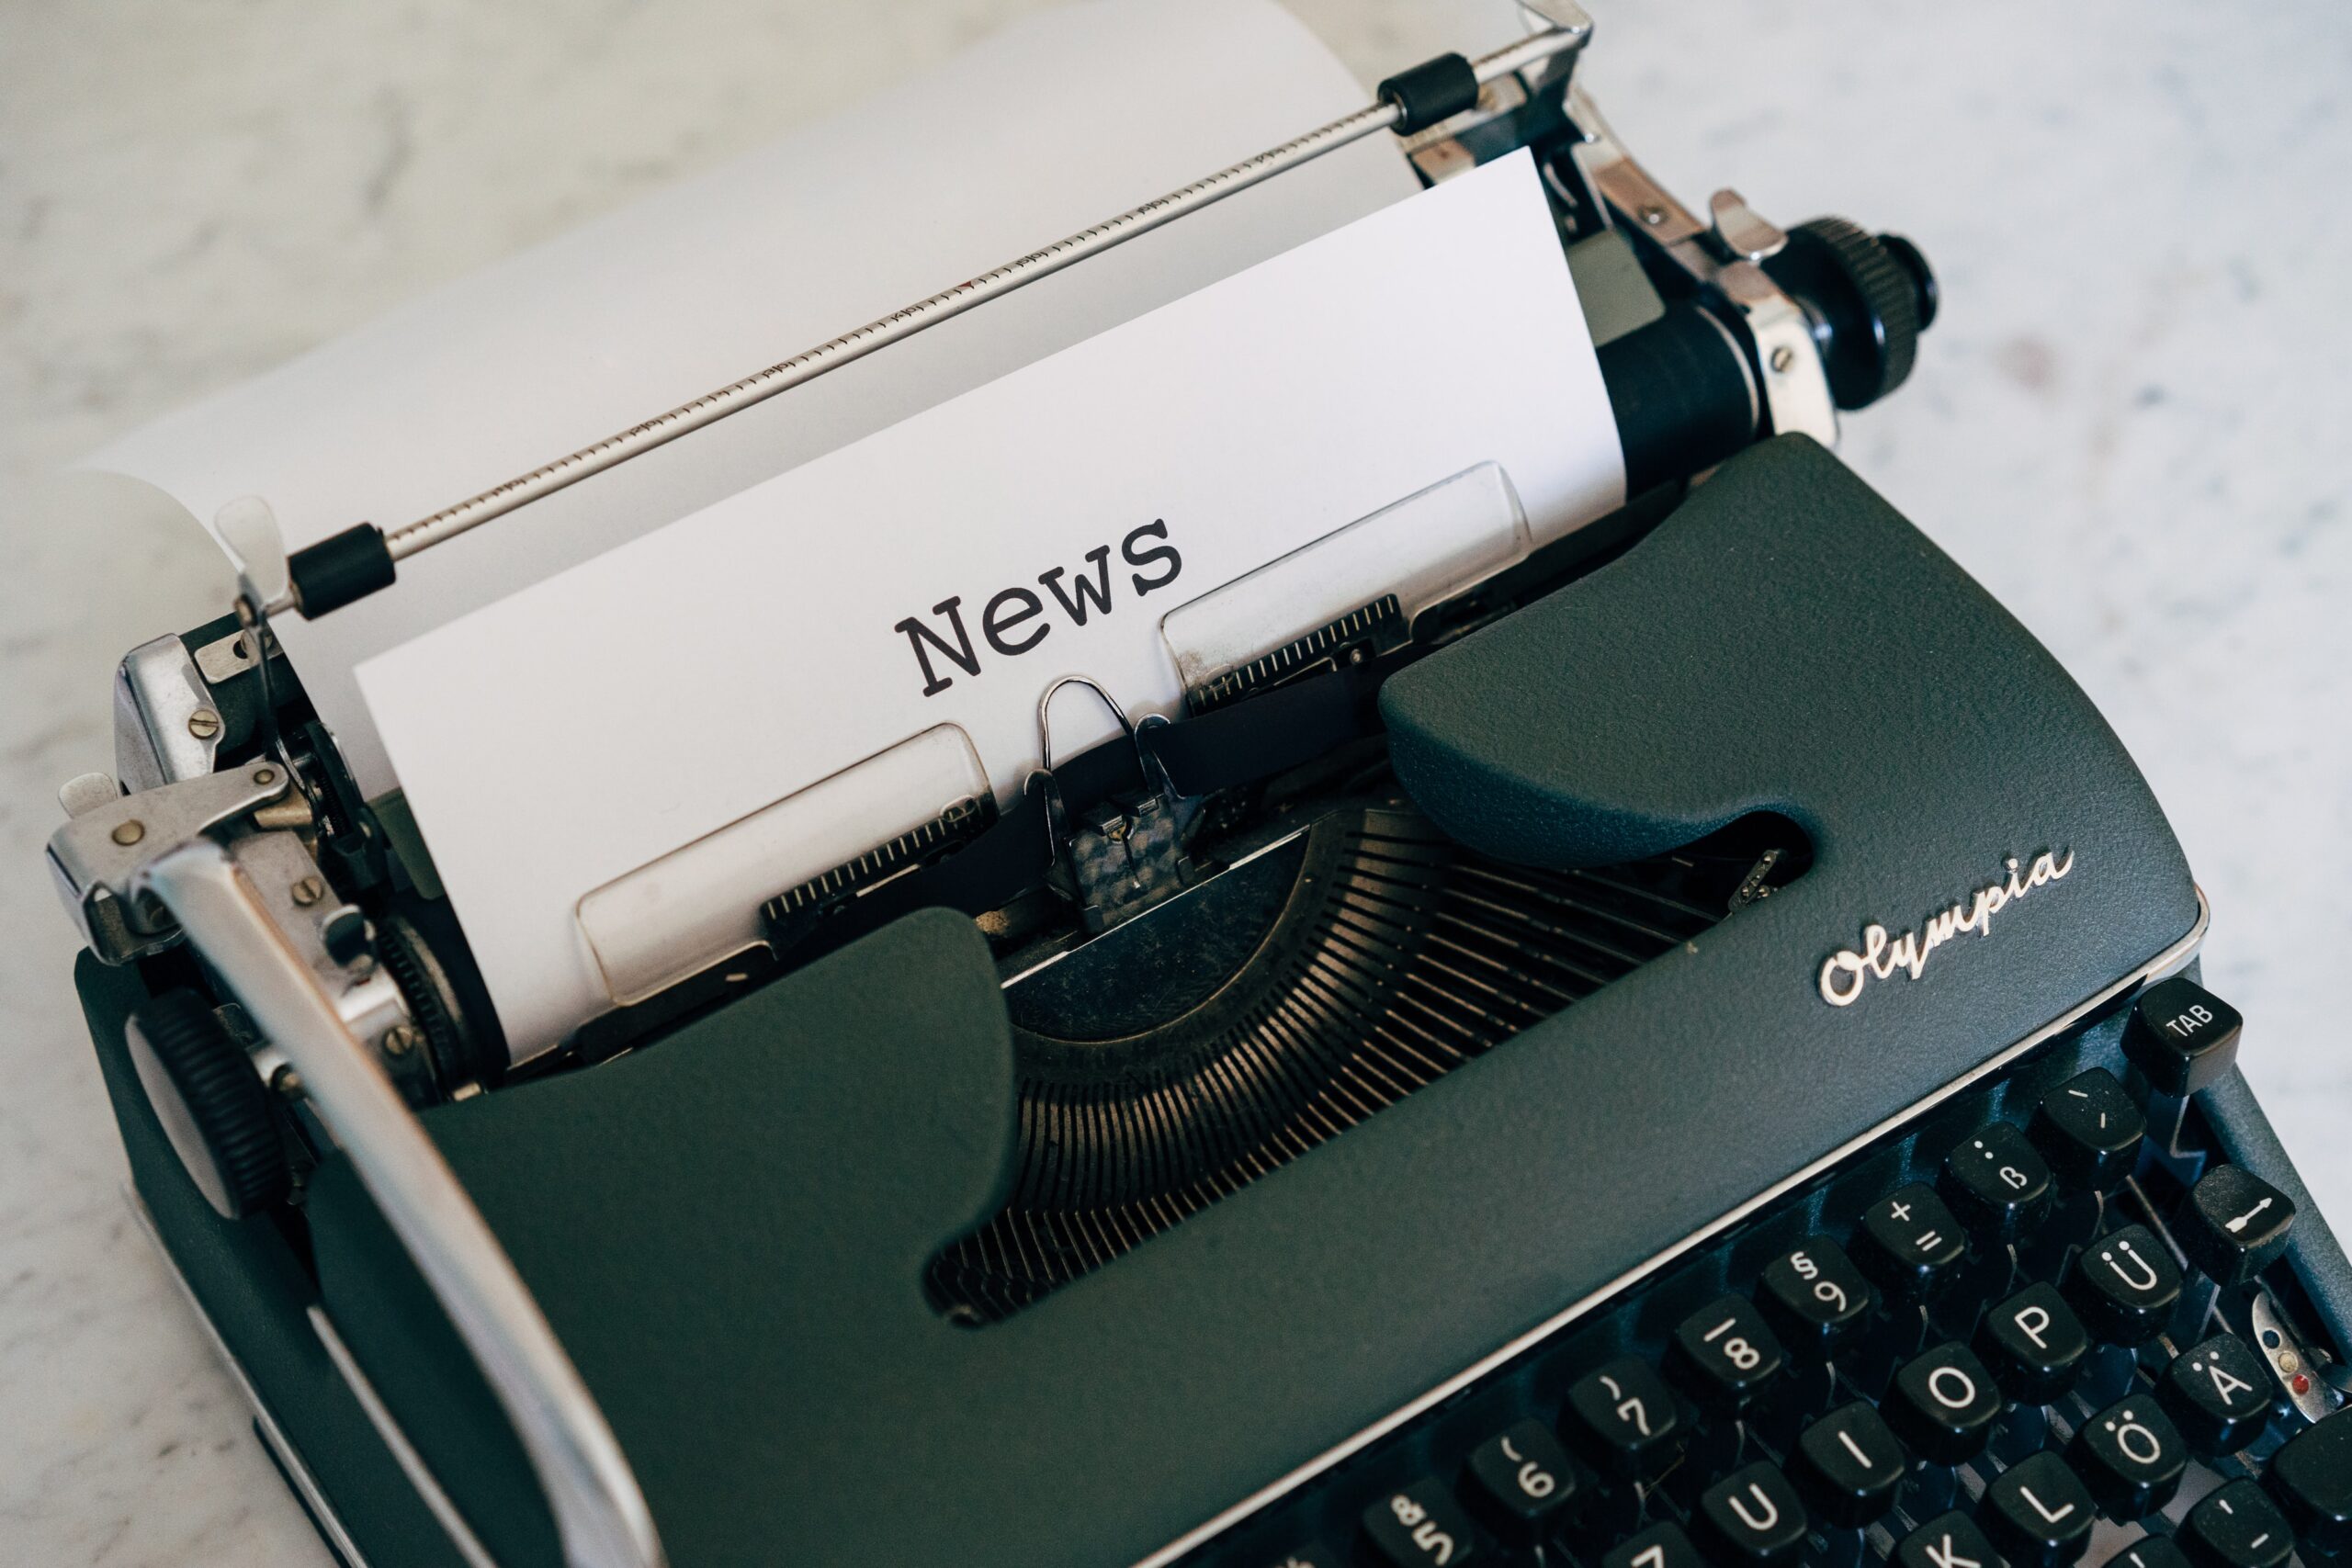 Typewriter with news on it